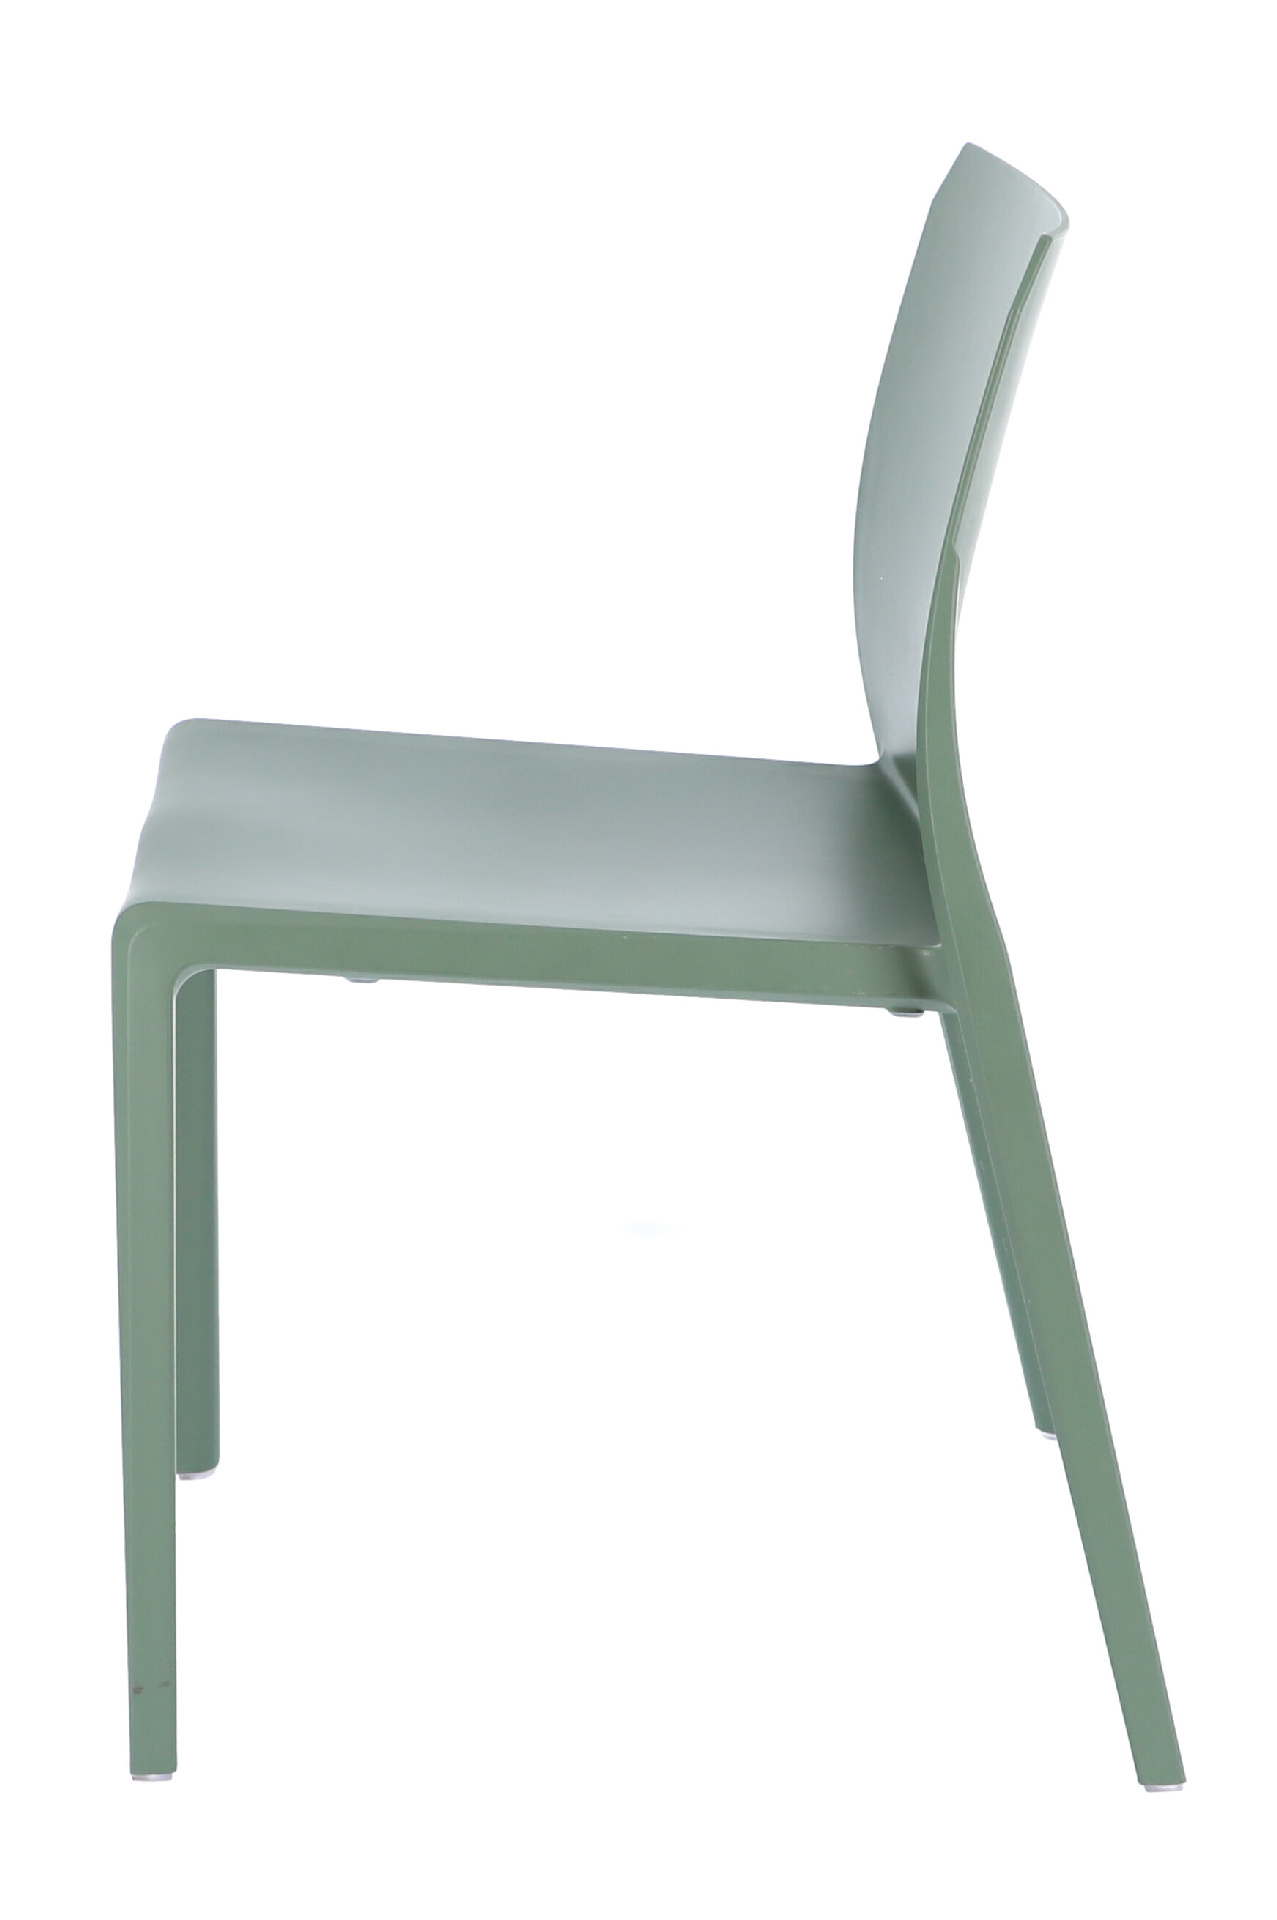 Stilvoller Stapelstuhl Mia aus Kunststoff Outdoor geeignet